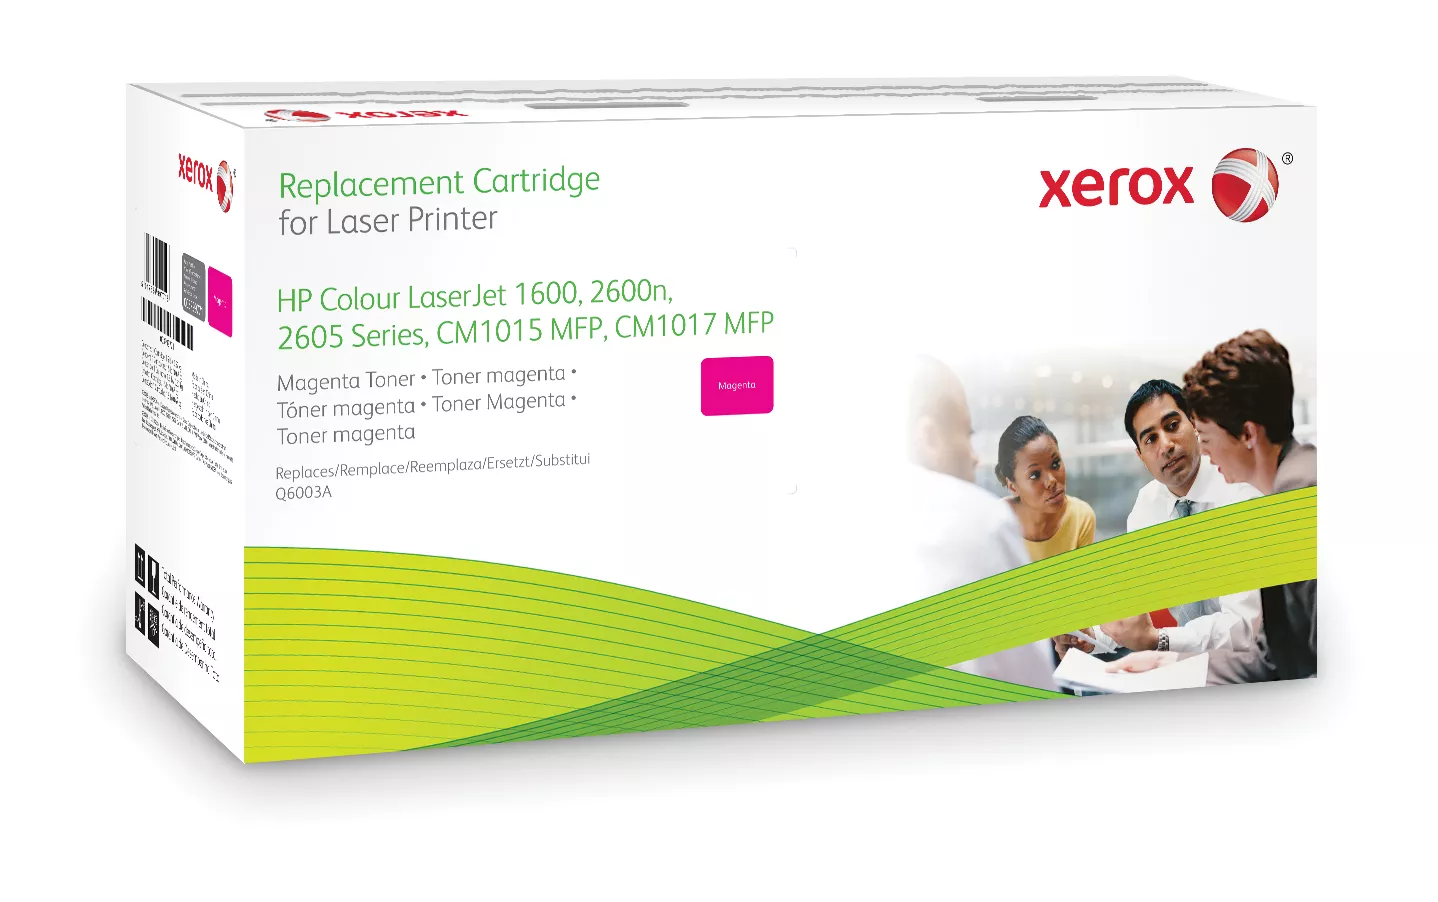 Achat XEROX XRC TONER HP CLJ series 1600/2600 Magen et autres produits de la marque Xerox